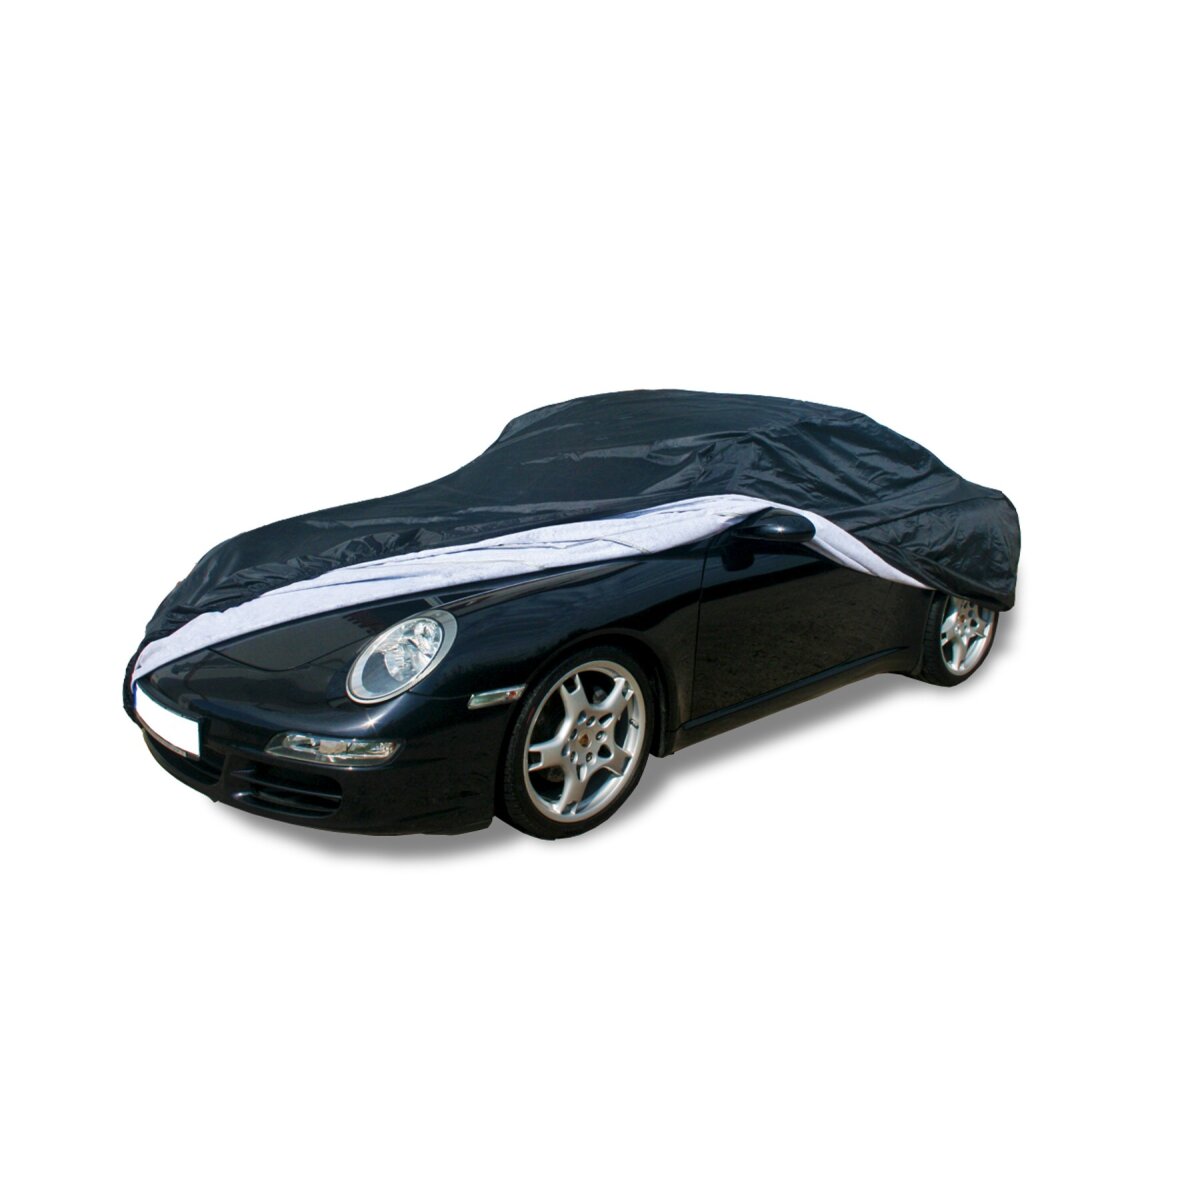 https://www.autoabdeckung.com/media/image/product/12264/lg/premium-autoabdeckung-outdoor-car-cover-fuer-audi-s3-limousine-8v.jpg